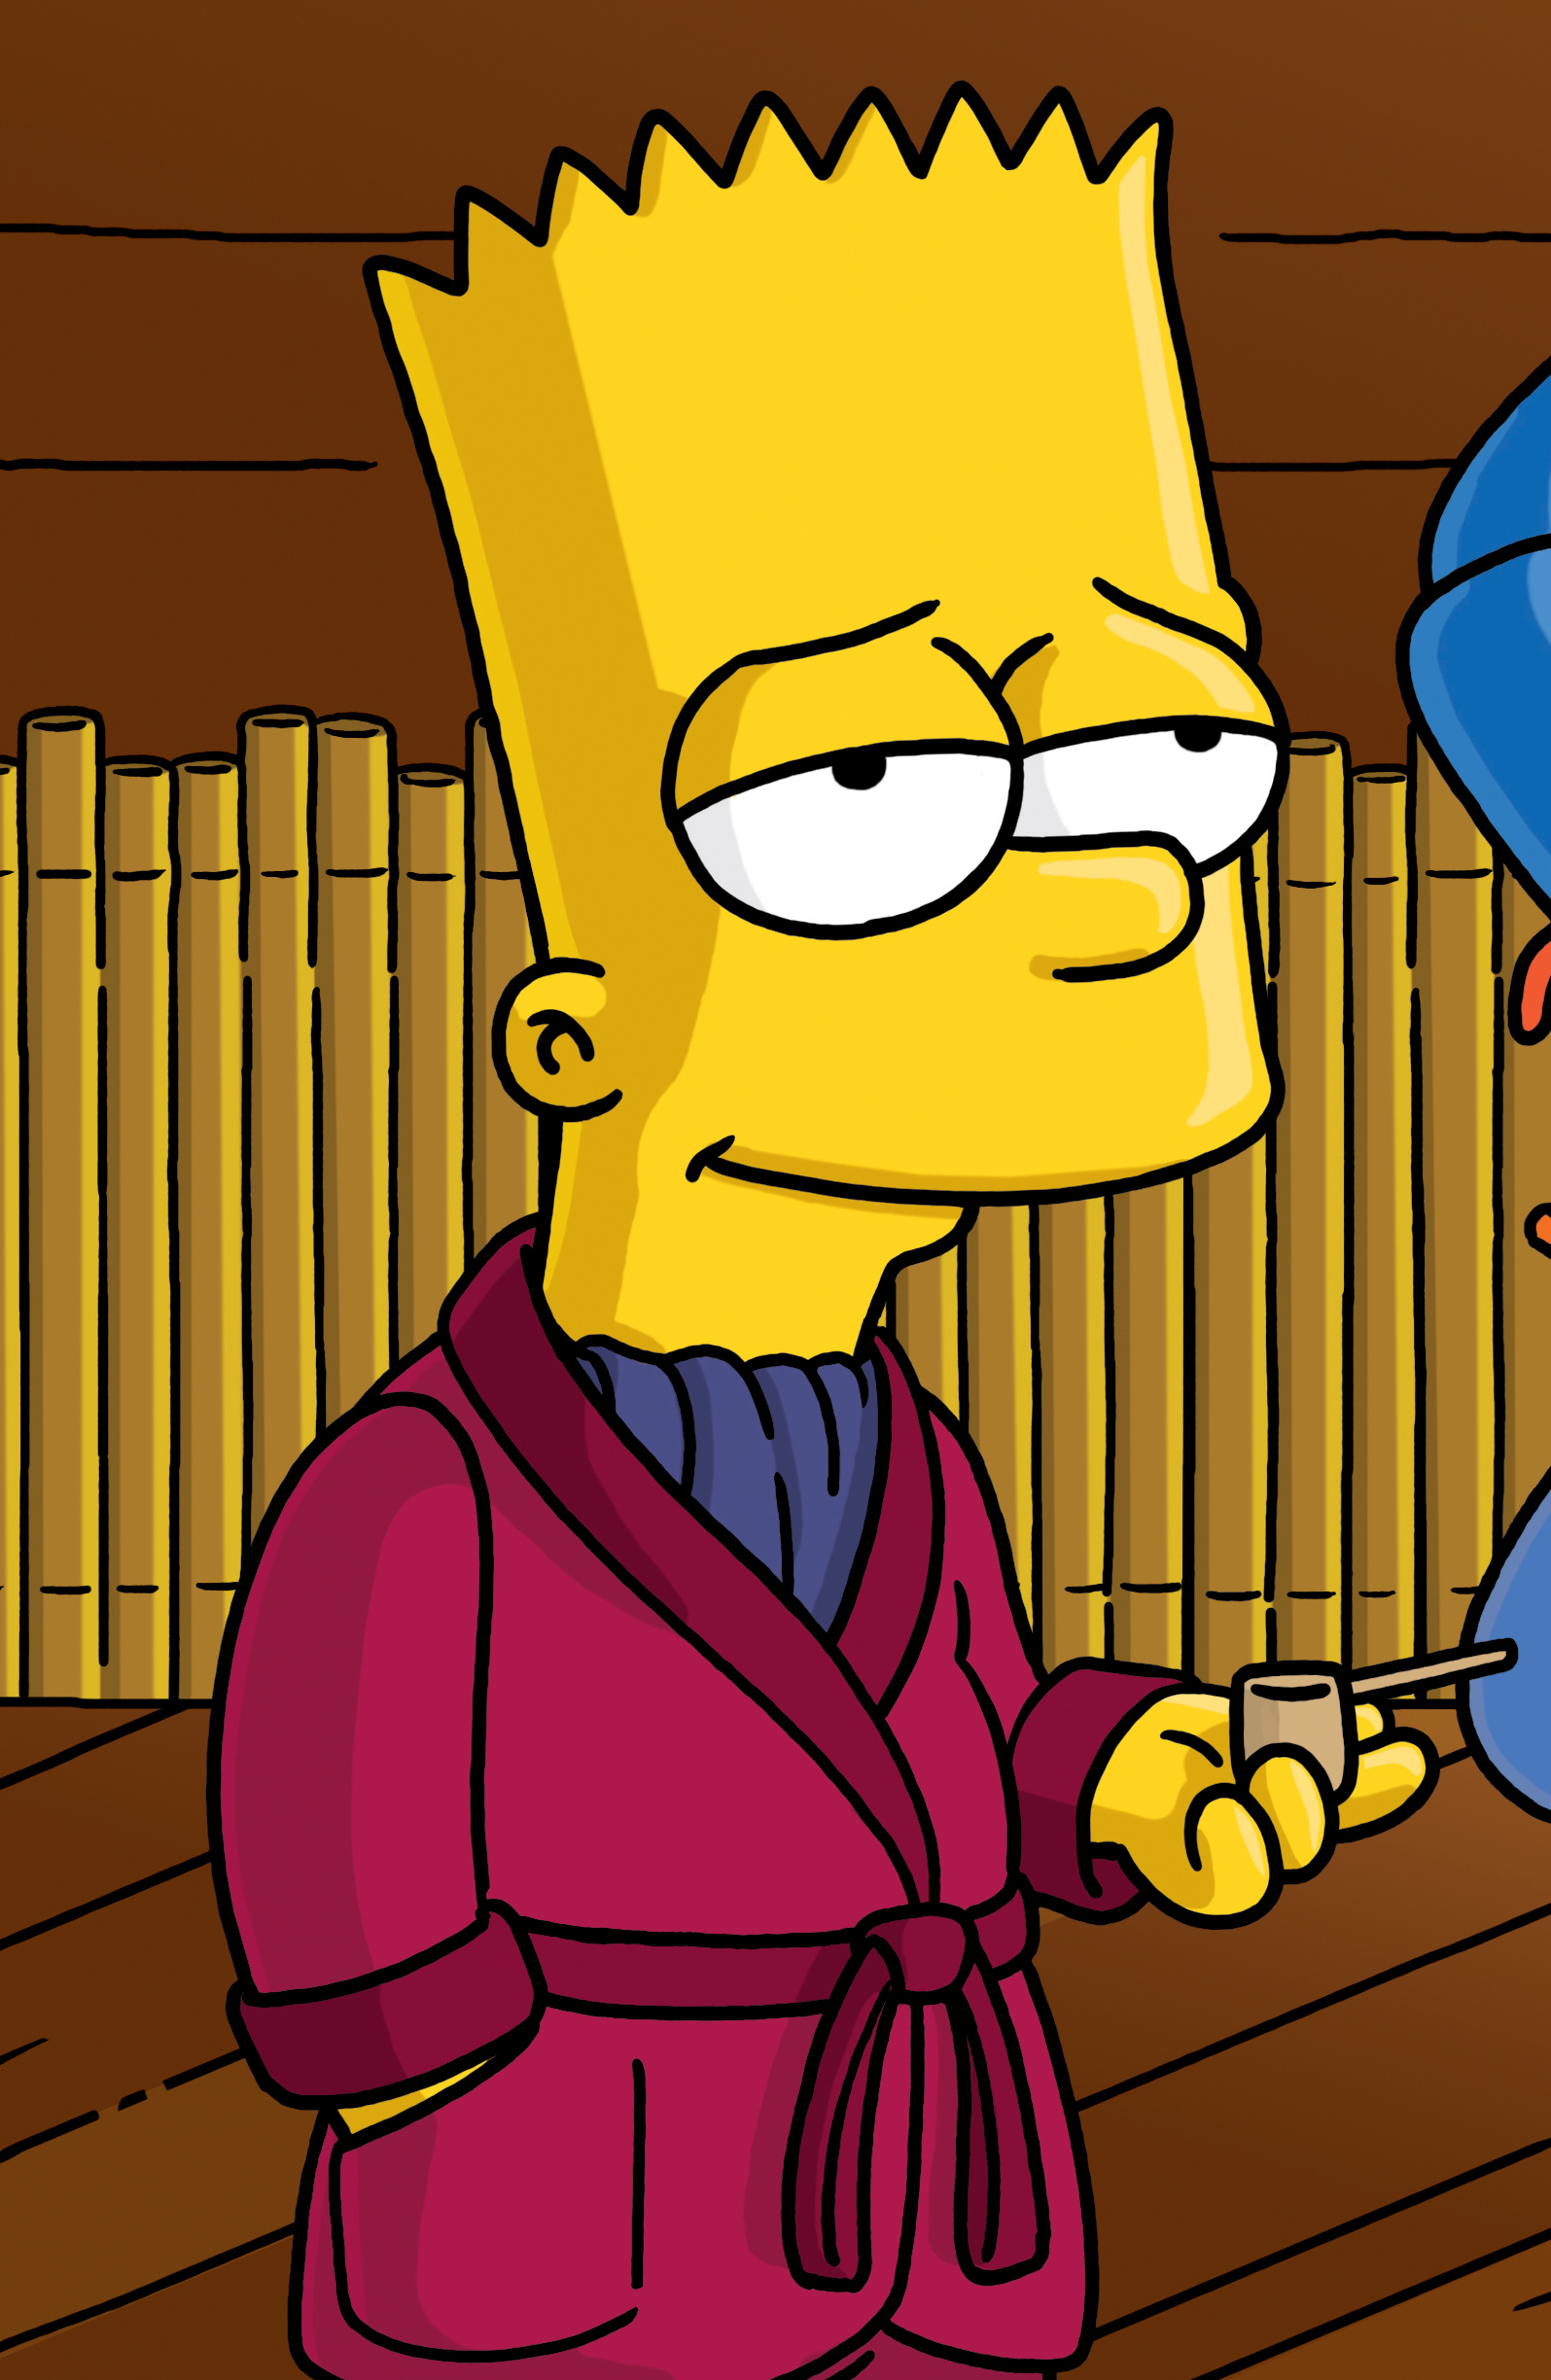 Bart Simpson on THE SIMPSONS